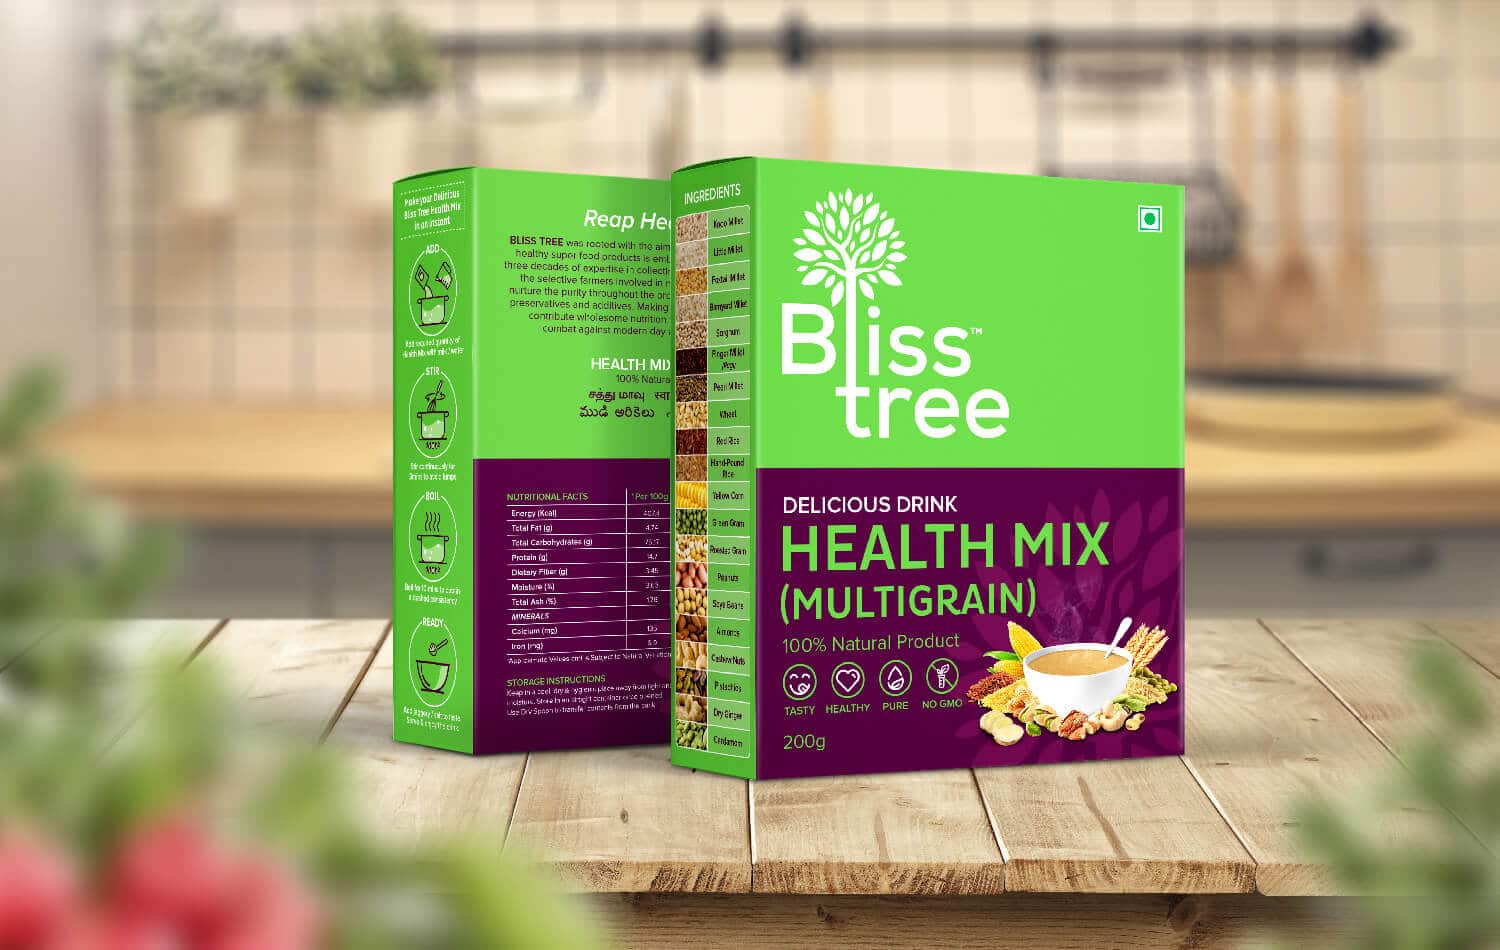 Bliss tree packaging design - Health Mix - Vatitude Building Smarter Brands